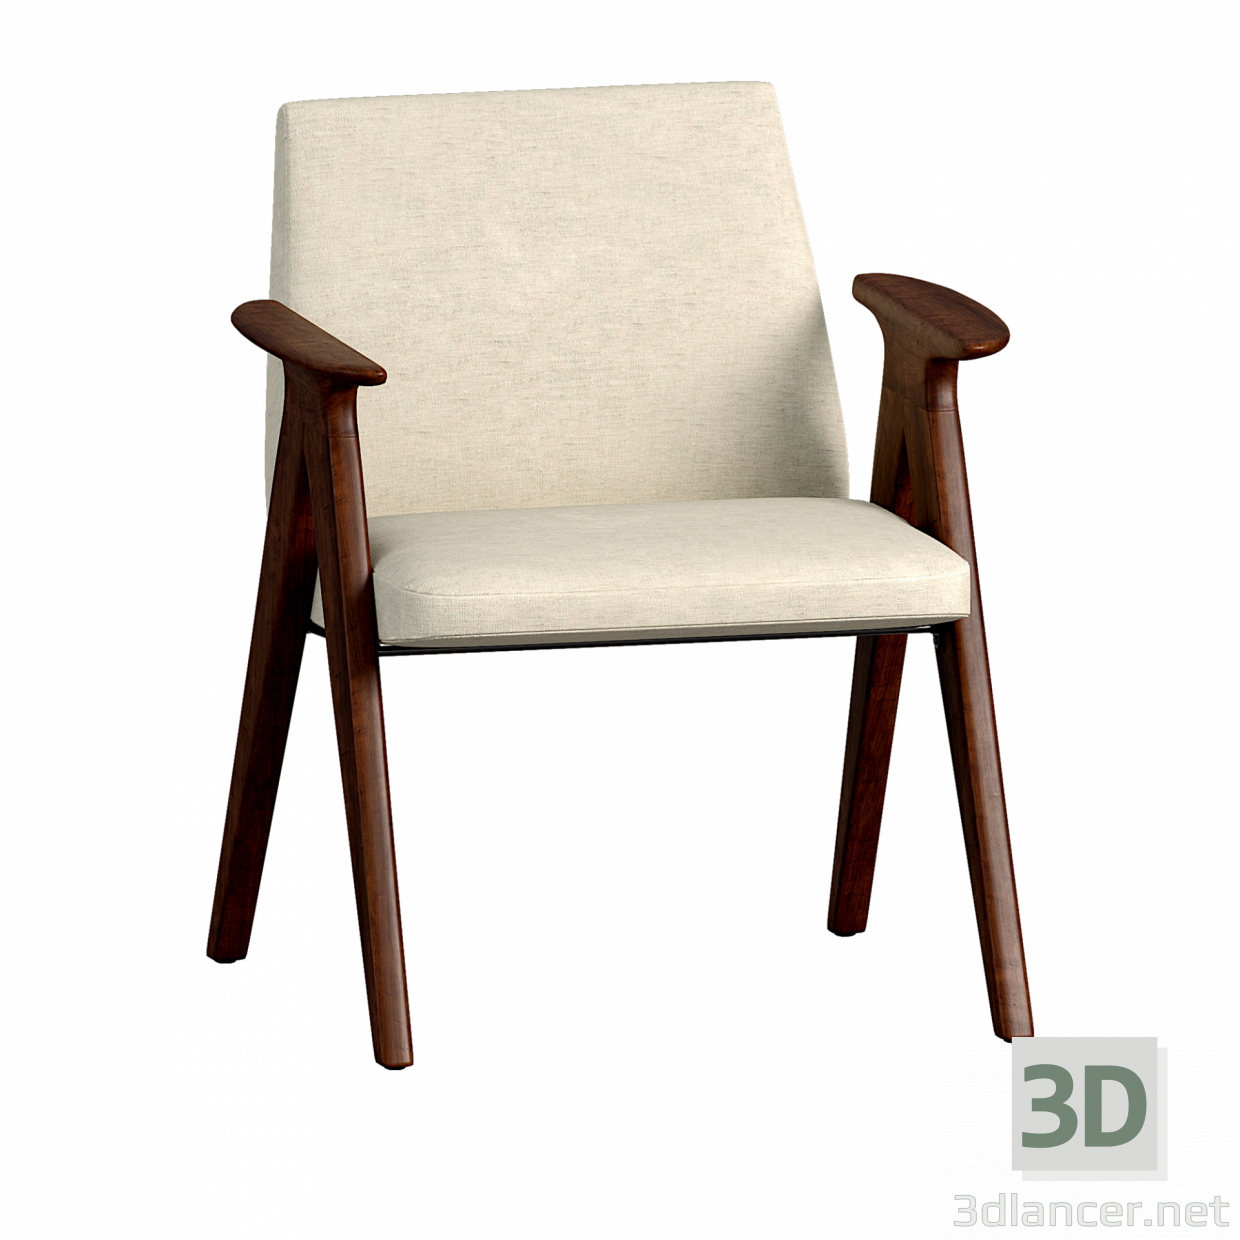 3D Libera koltuk modeli satın - render